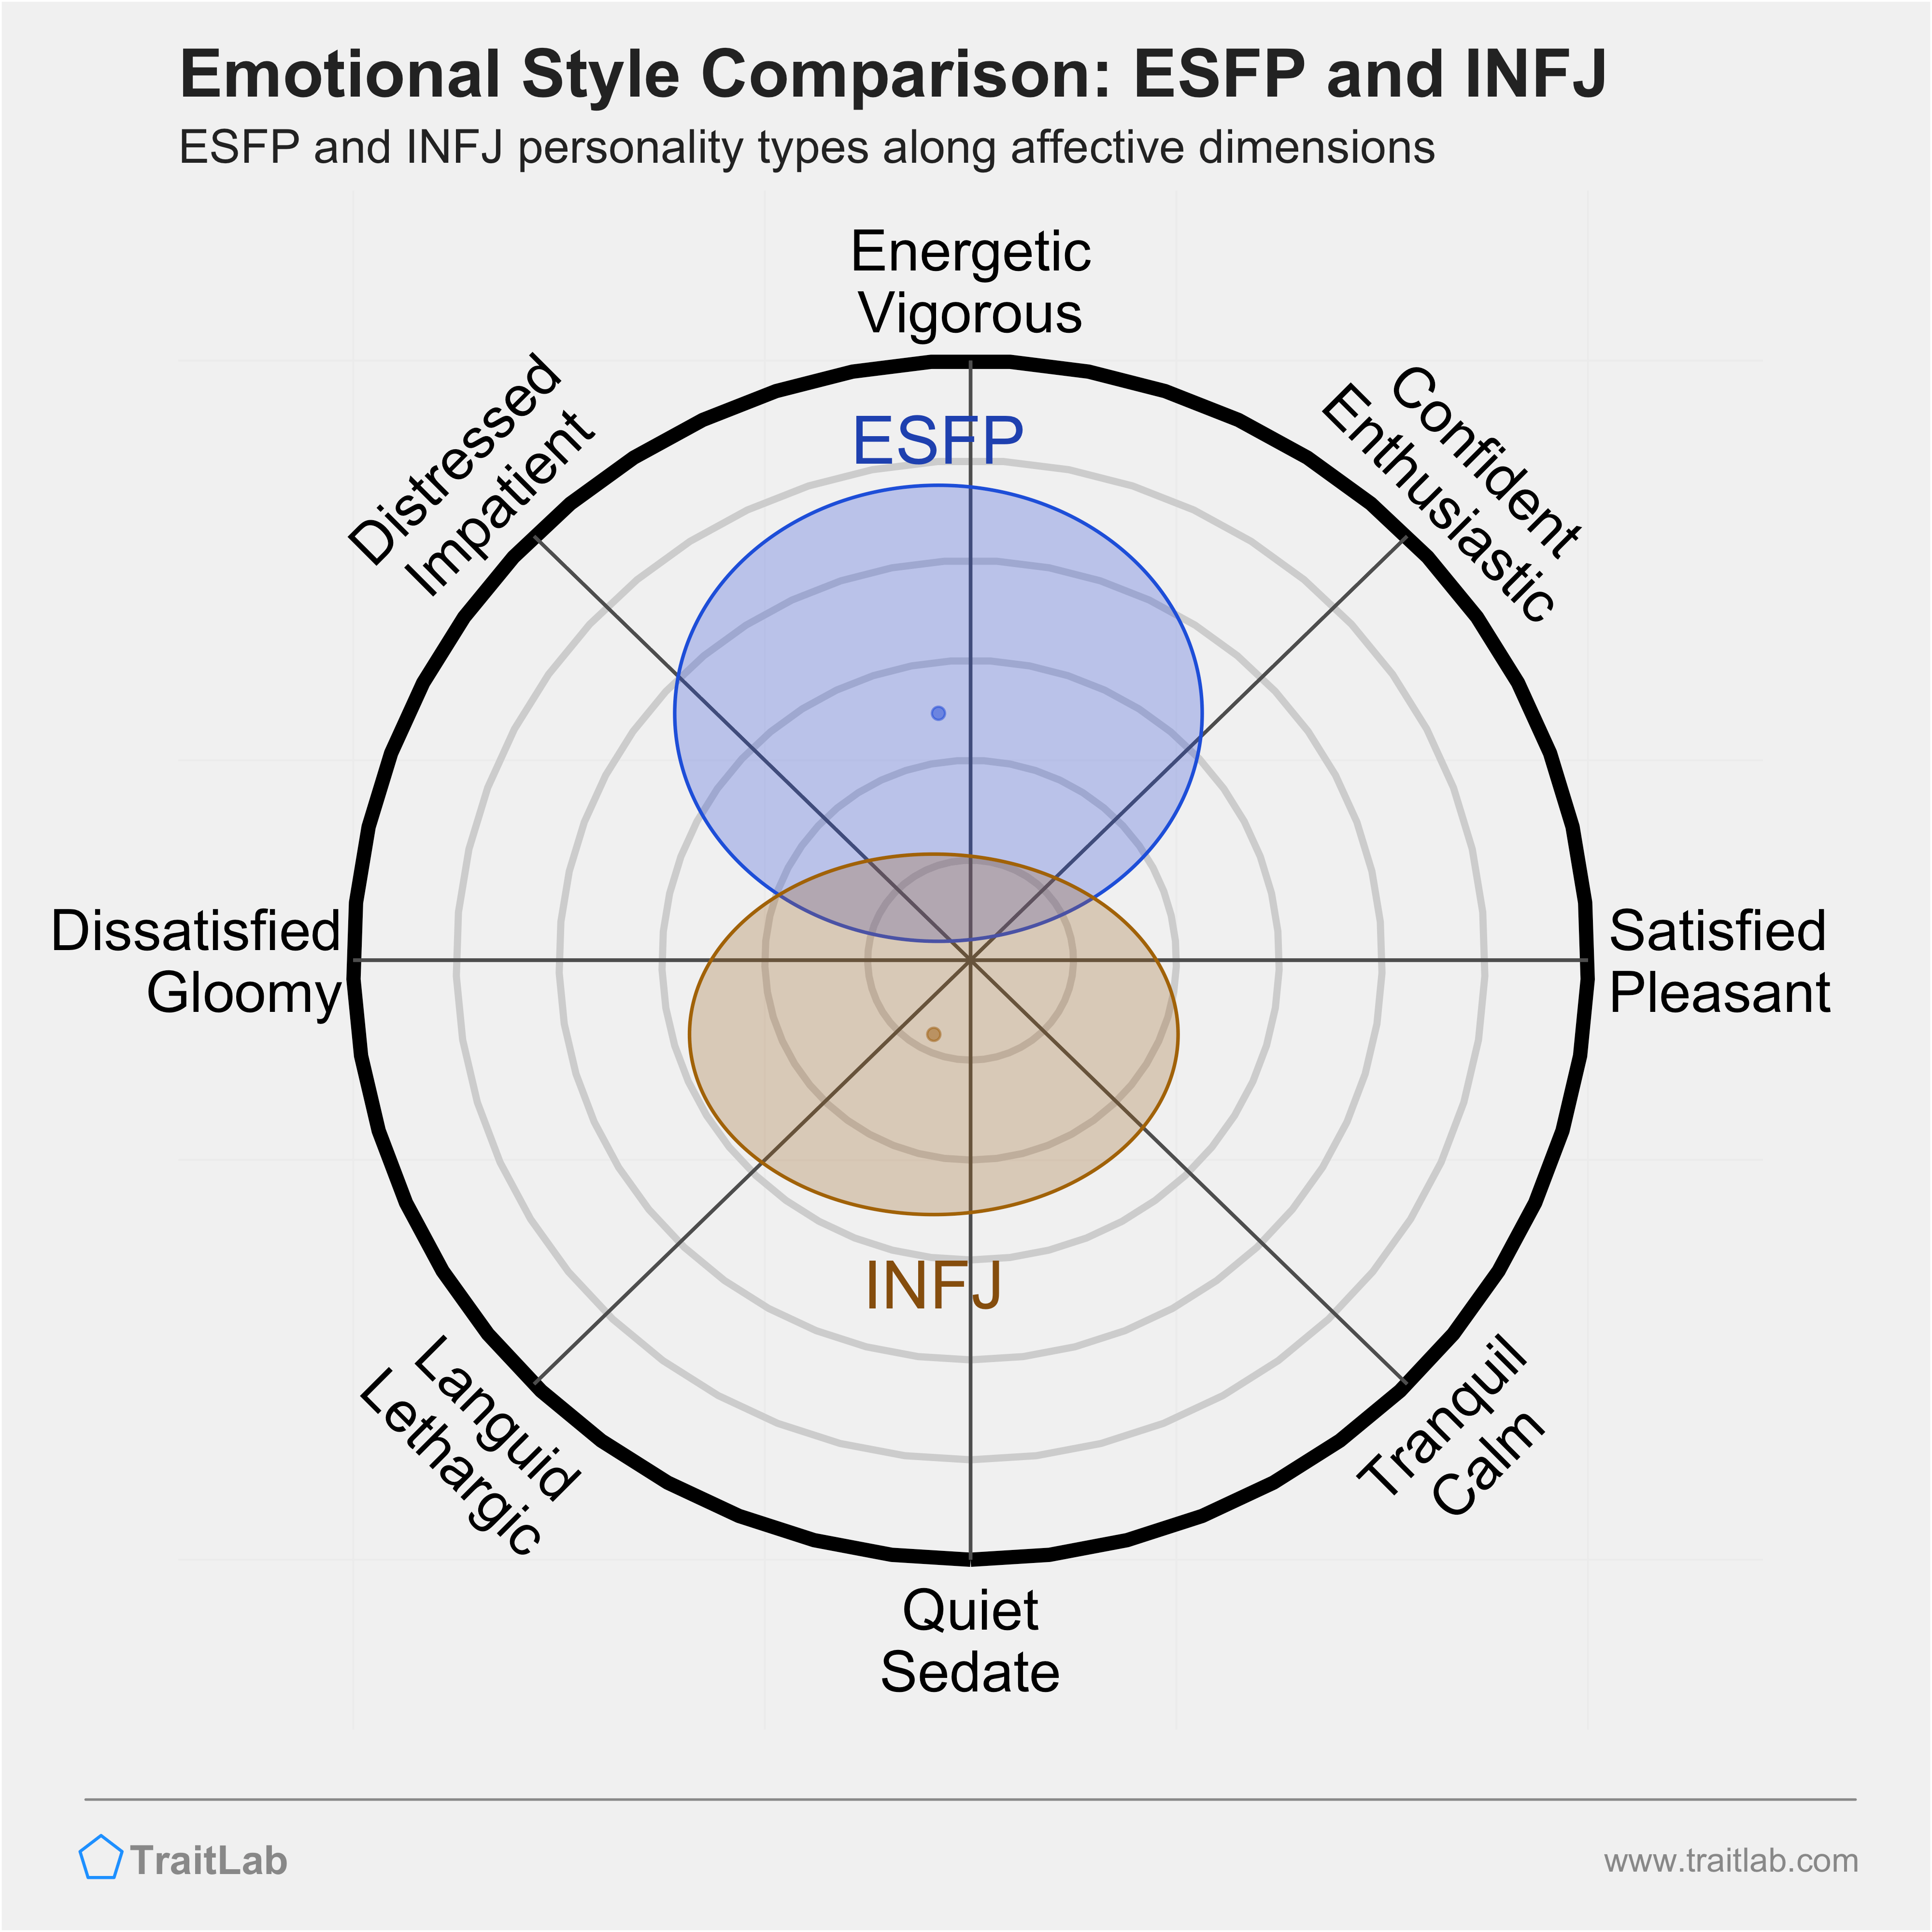 ESFP and INFJ comparison across emotional (affective) dimensions